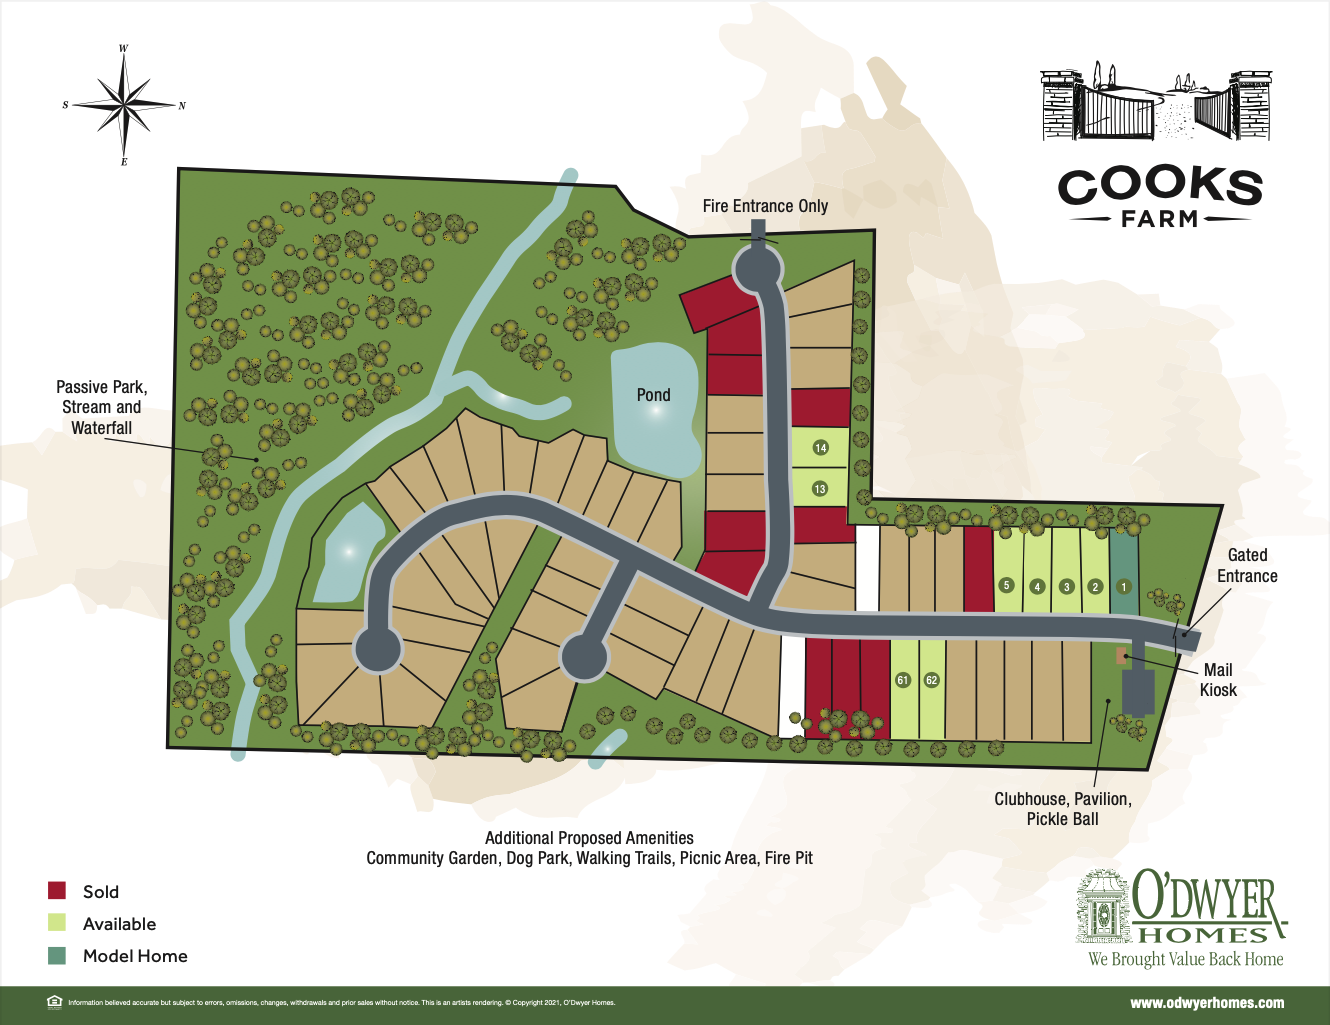 Cooks Farm site map